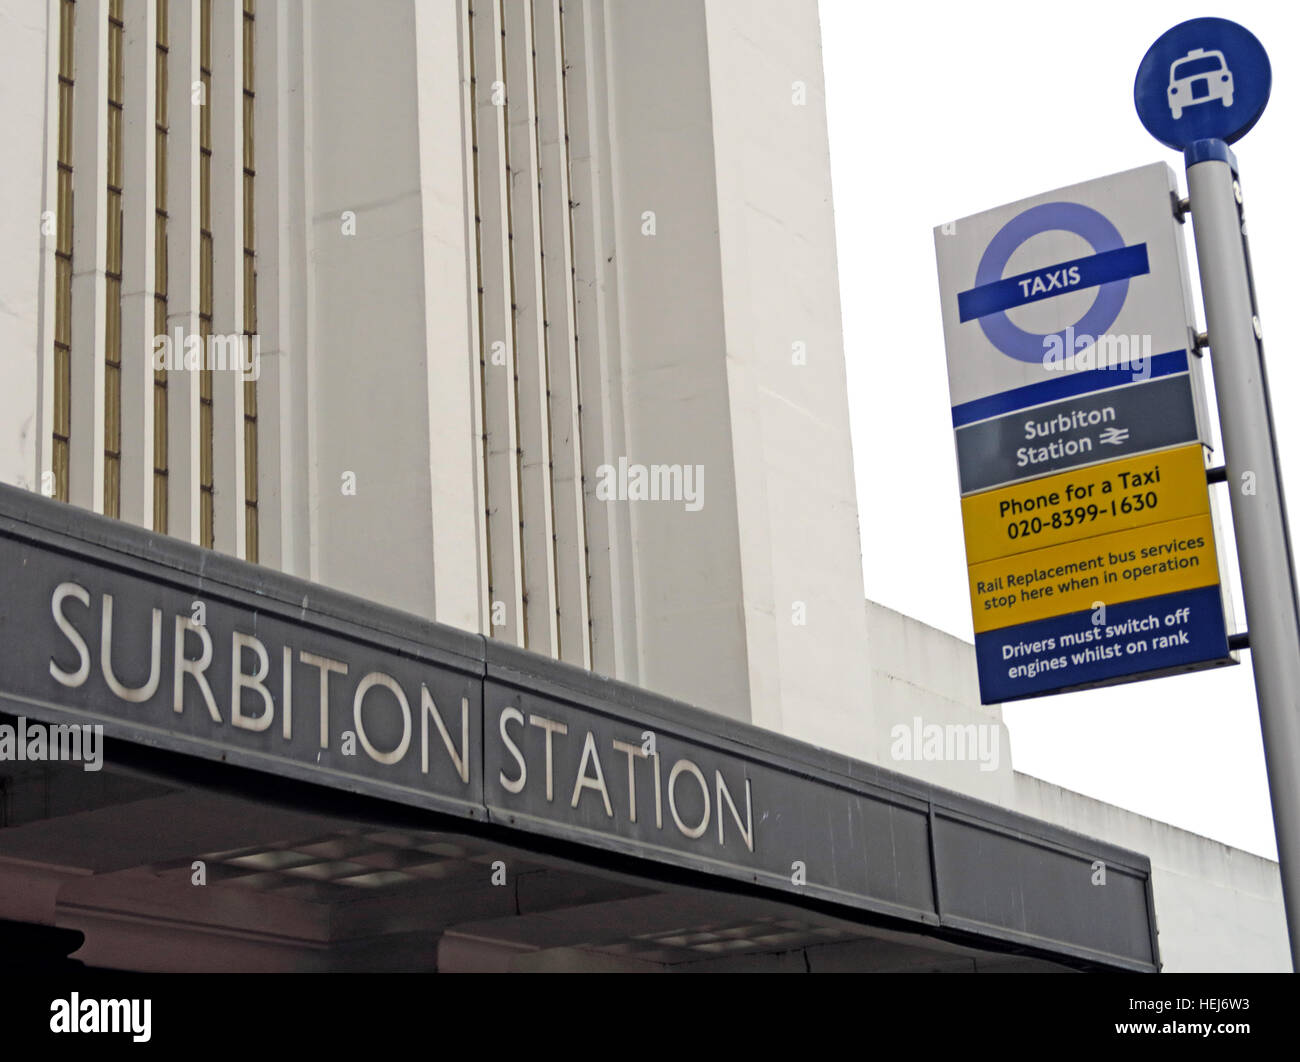 Surbiton Railway Station,SW Trains, West London, England,UK and bus transport links Stock Photo